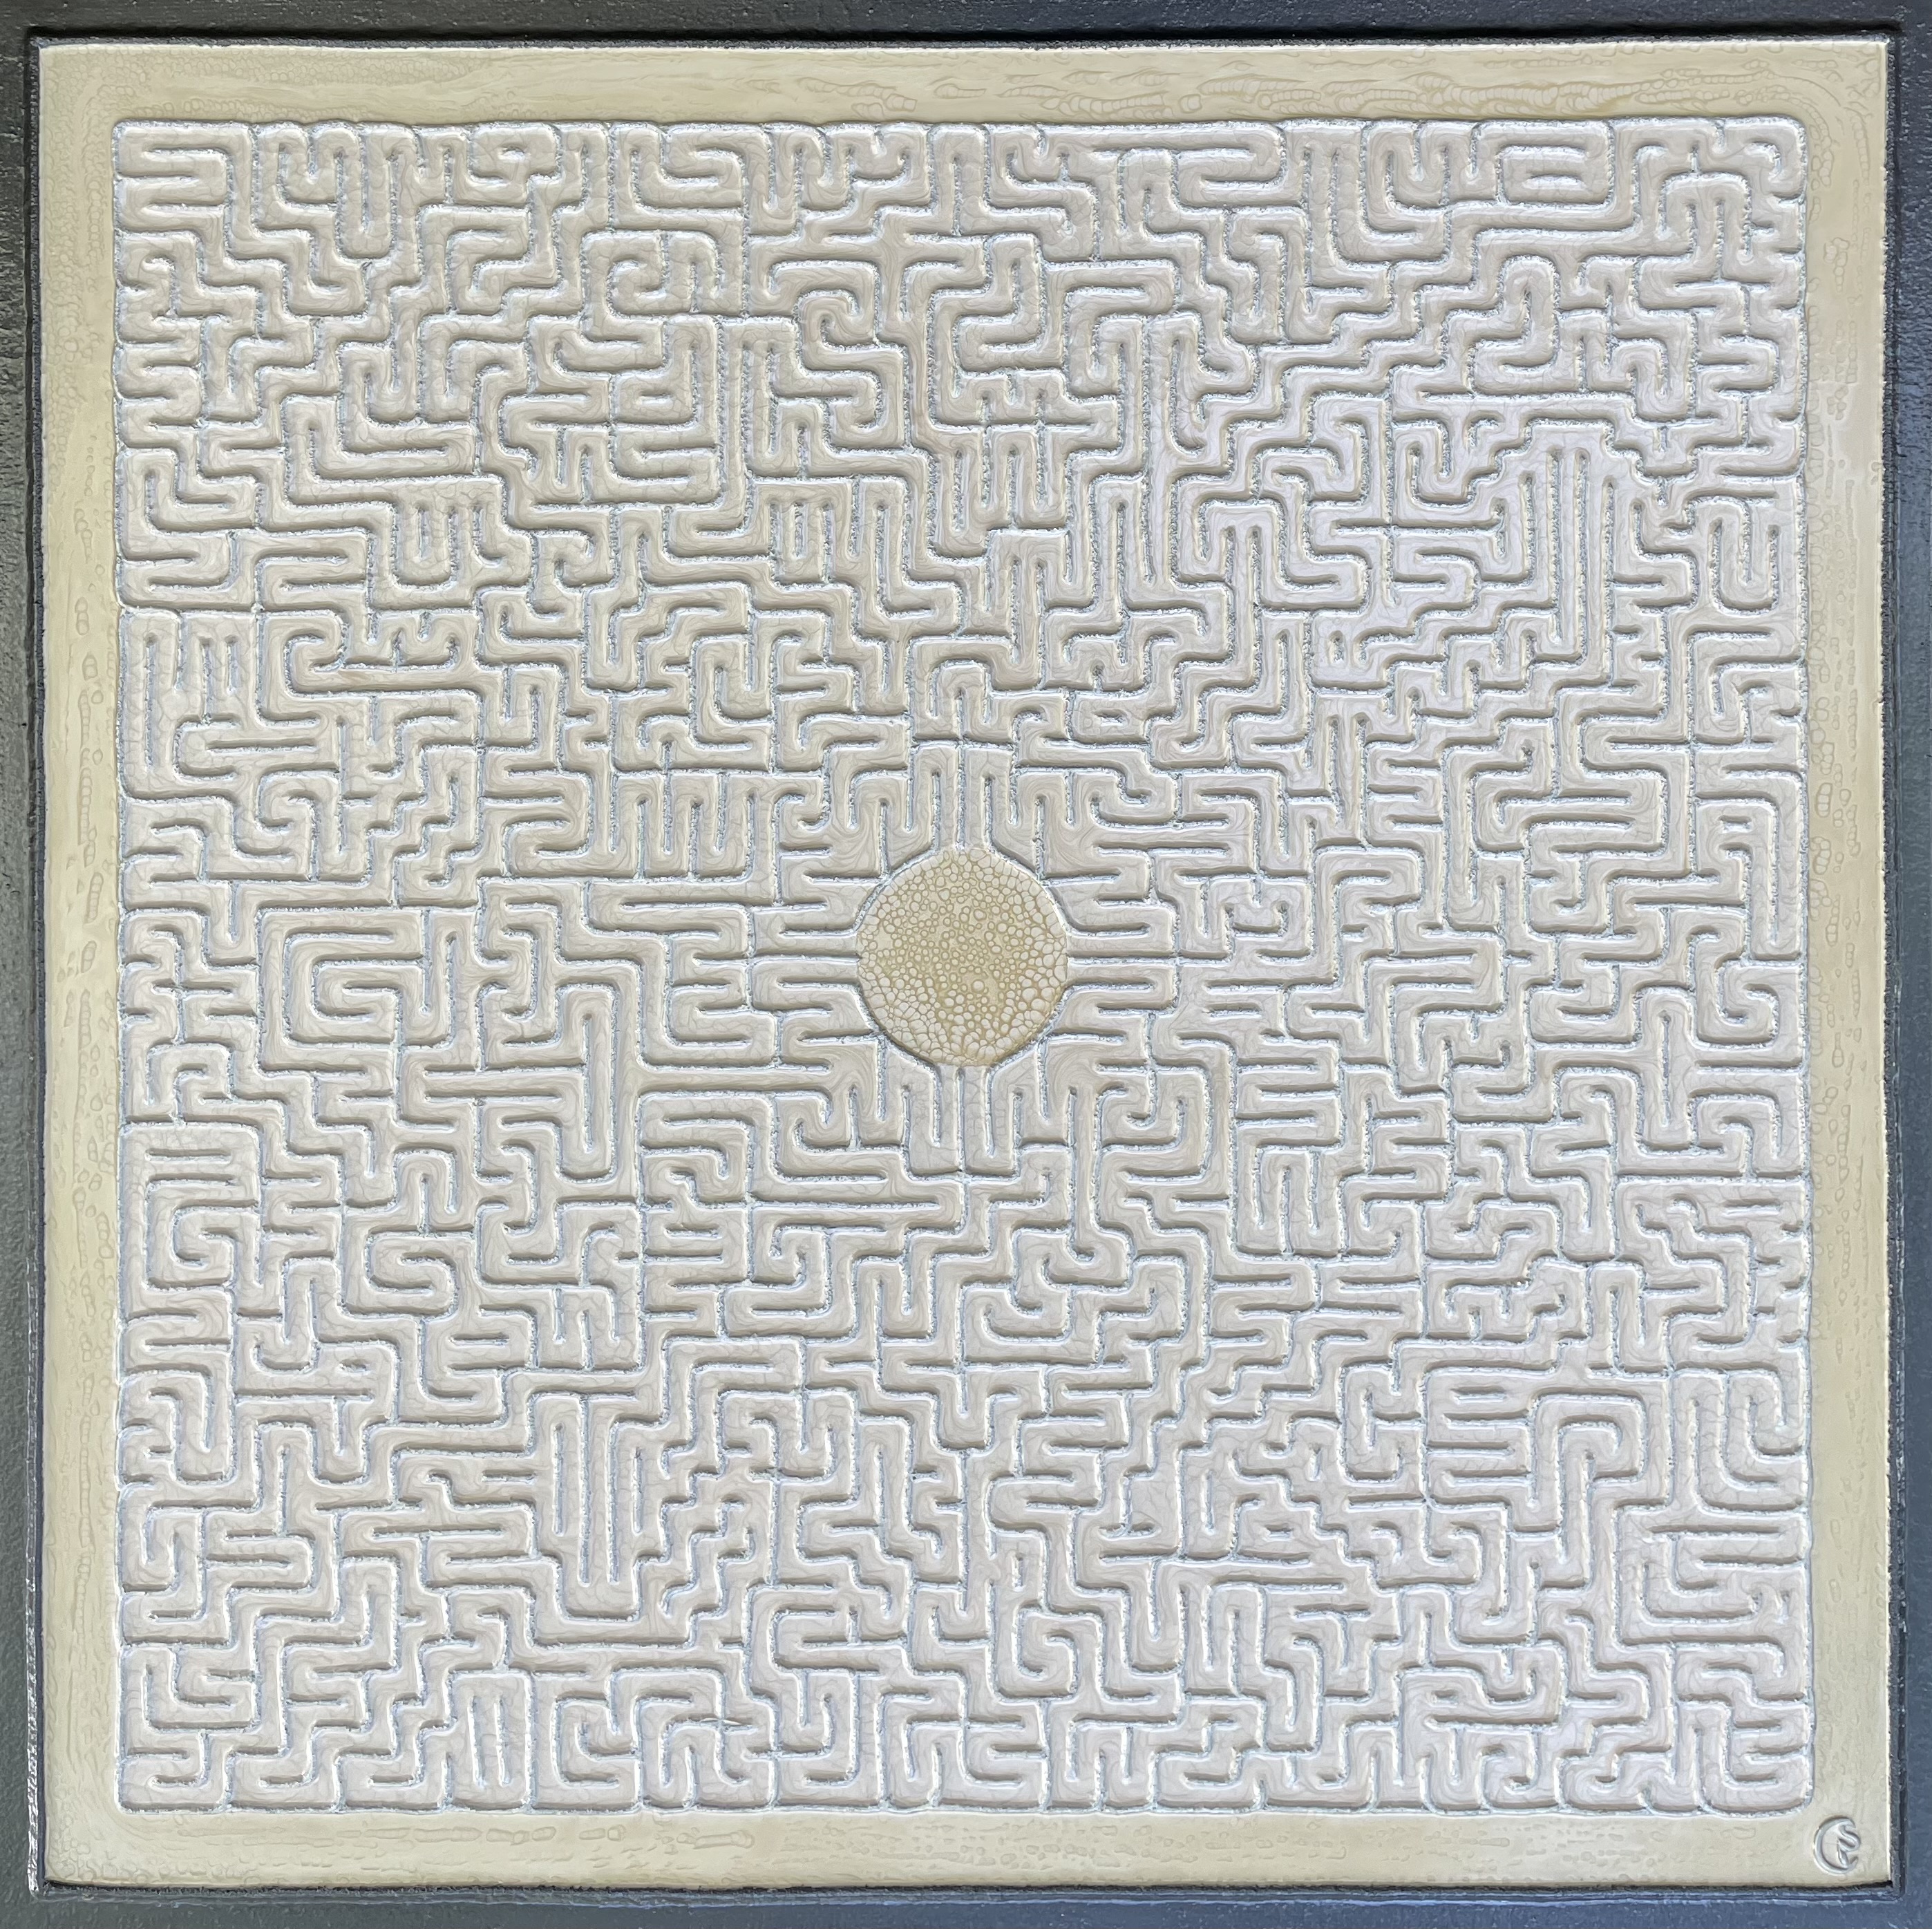 'sensation of choosing', a yes maze, cotton cord, acrylic, reactive oil on canvas, 36"x36", 2022